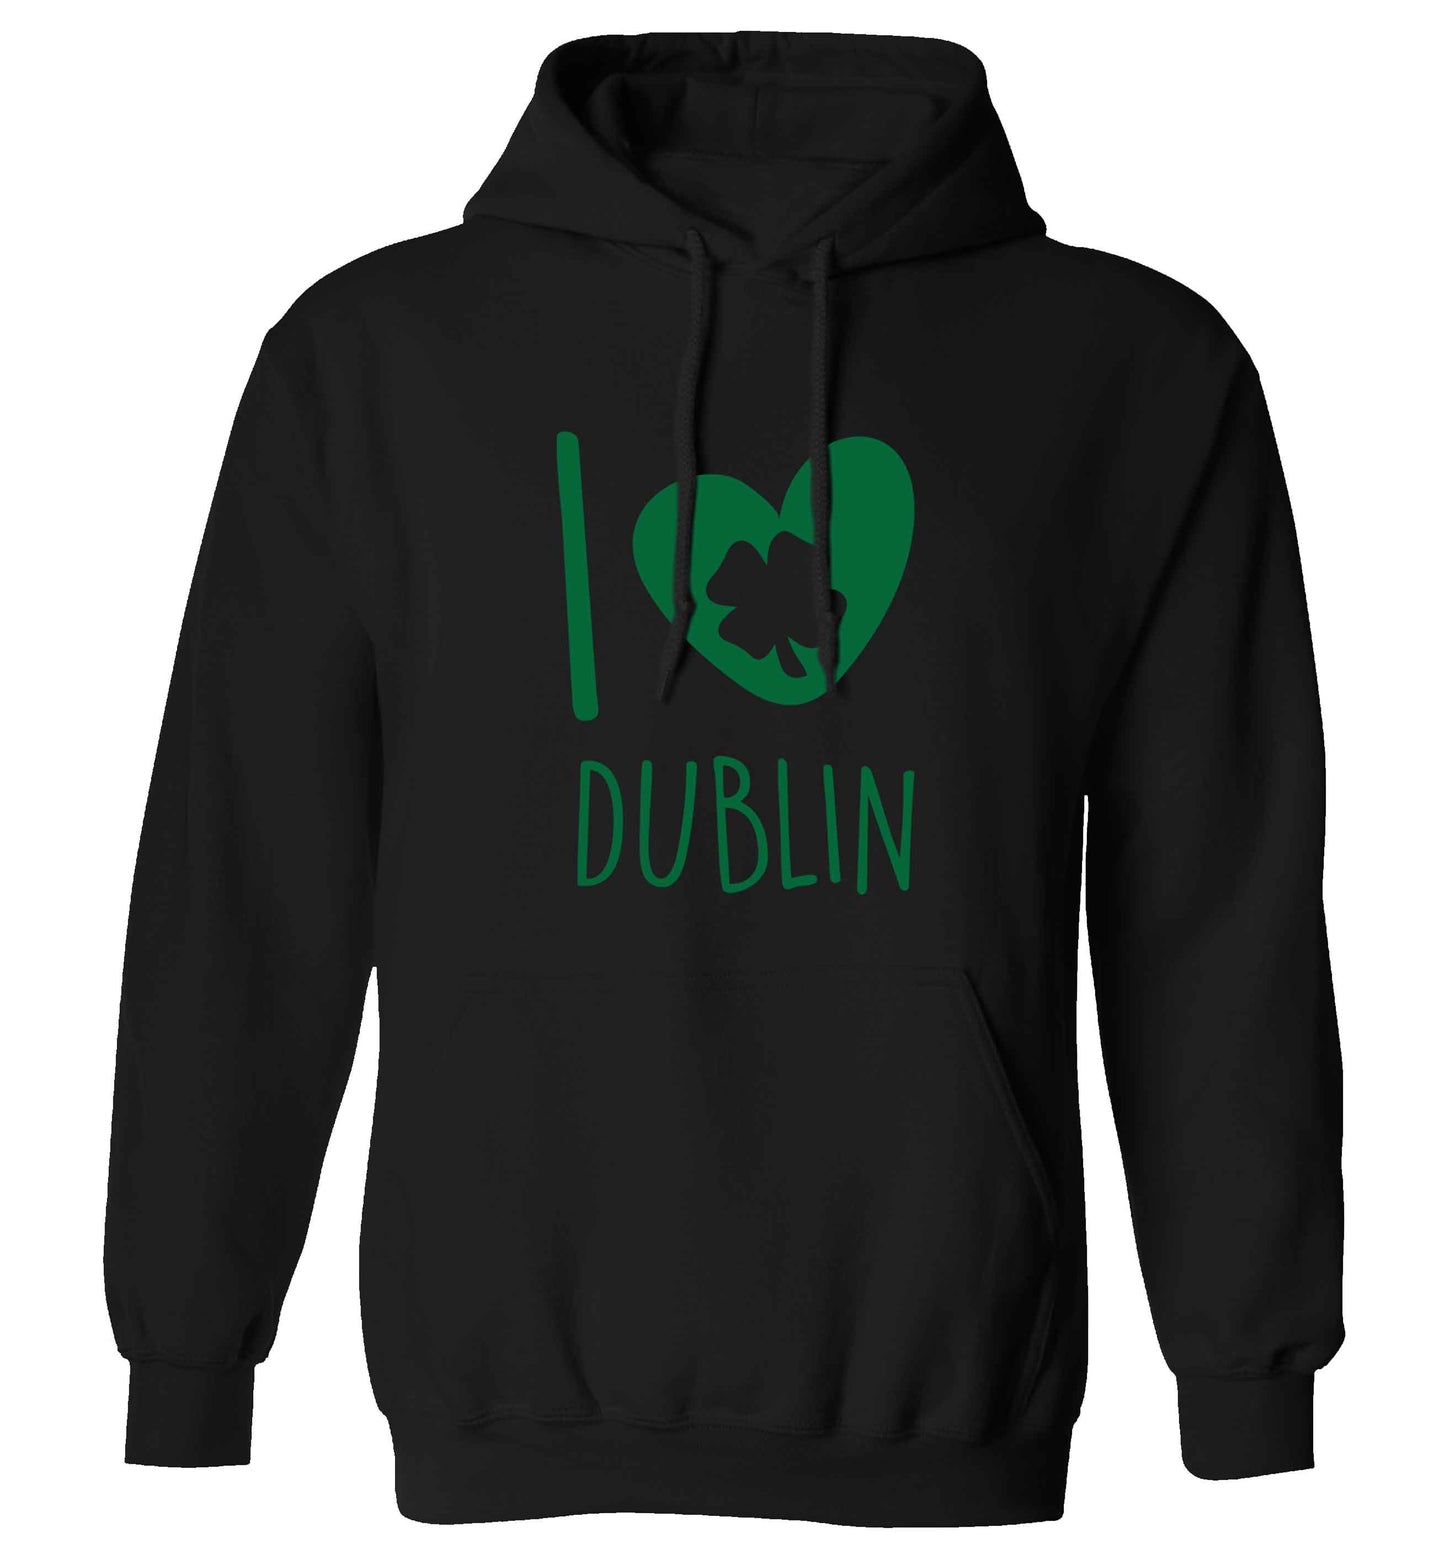 I love Dublin adults unisex black hoodie 2XL